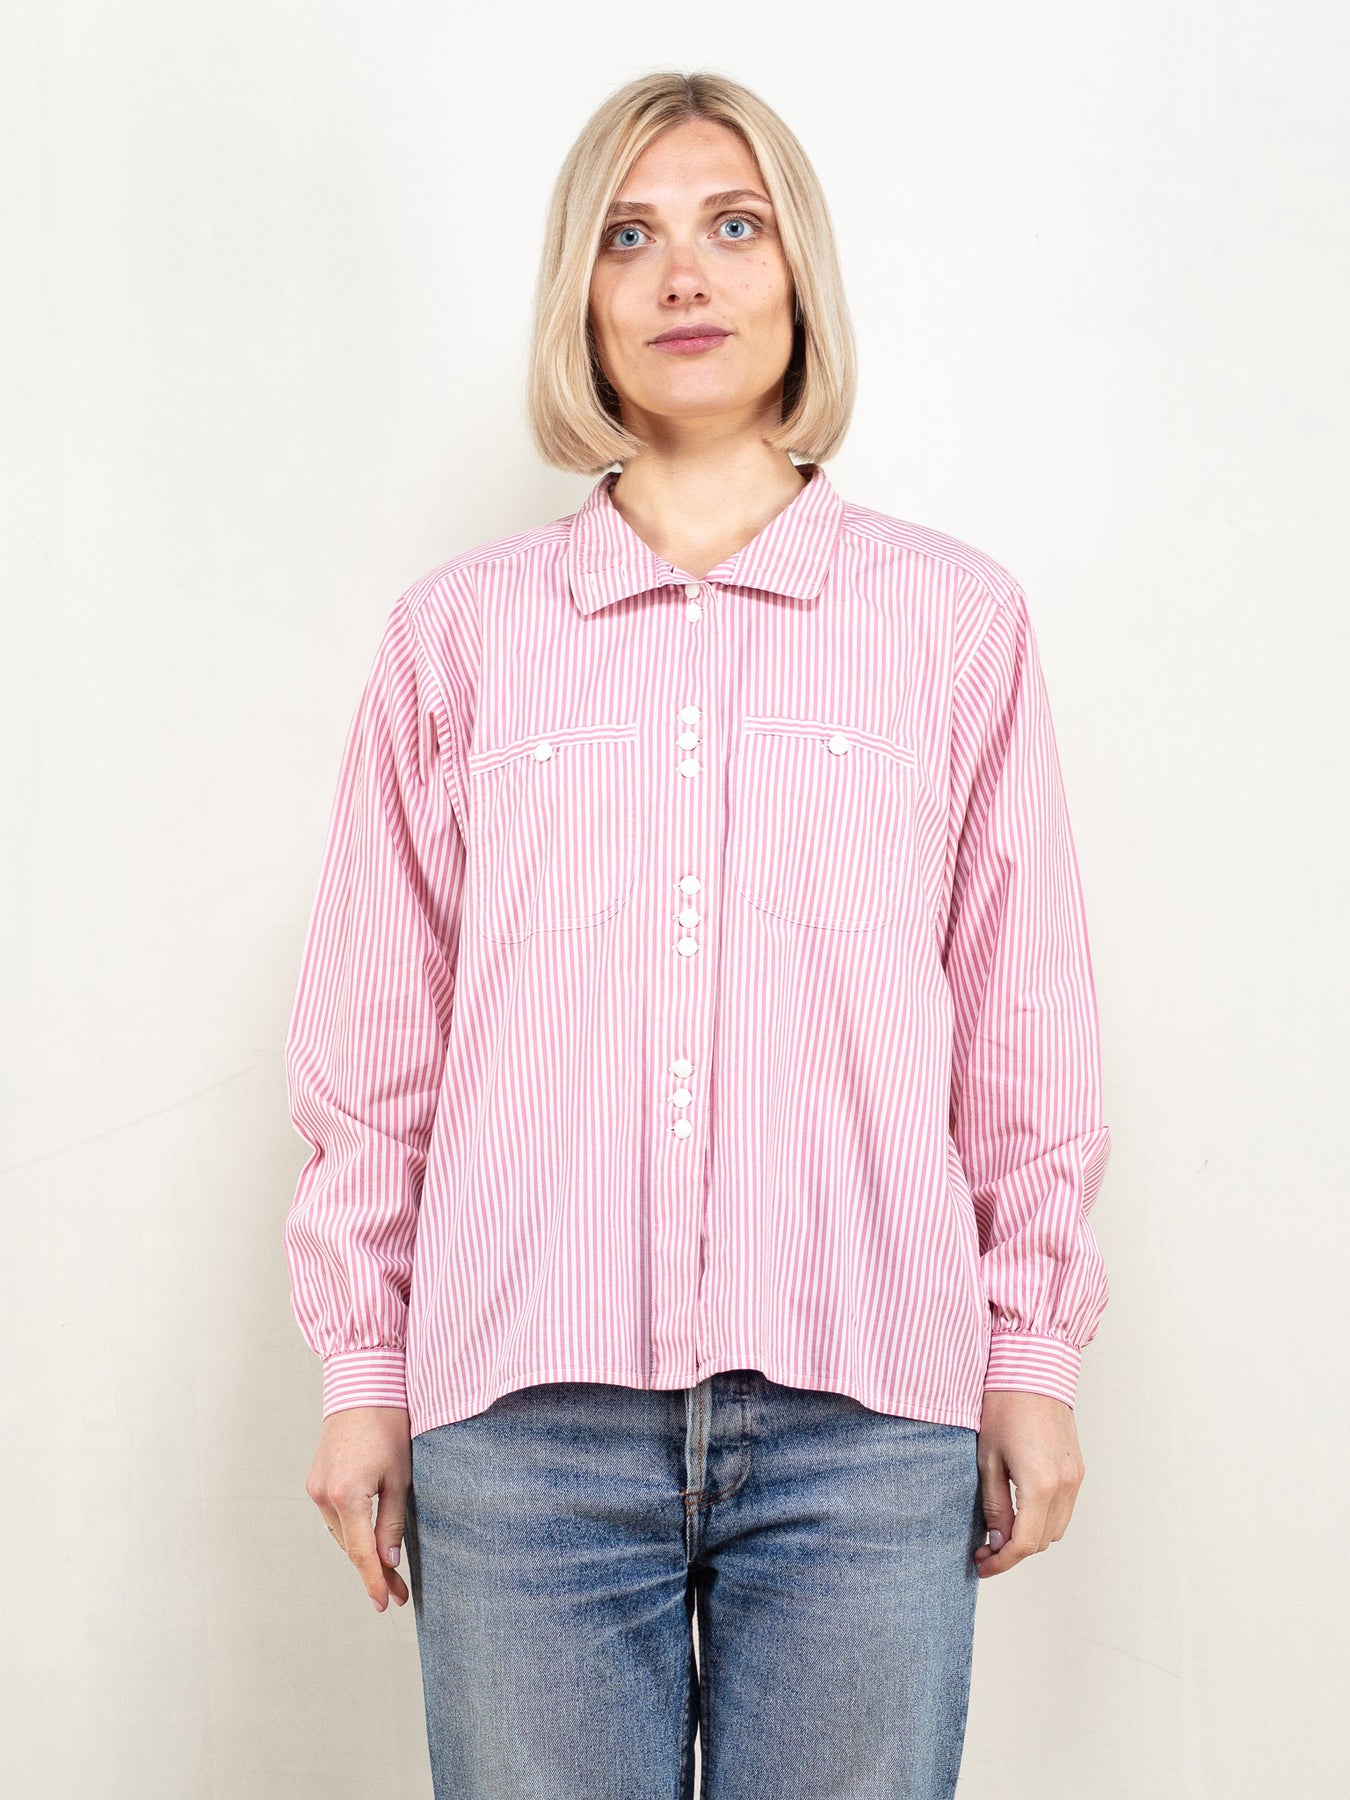 Online Vintage Store, 80's Women Striped Shirt